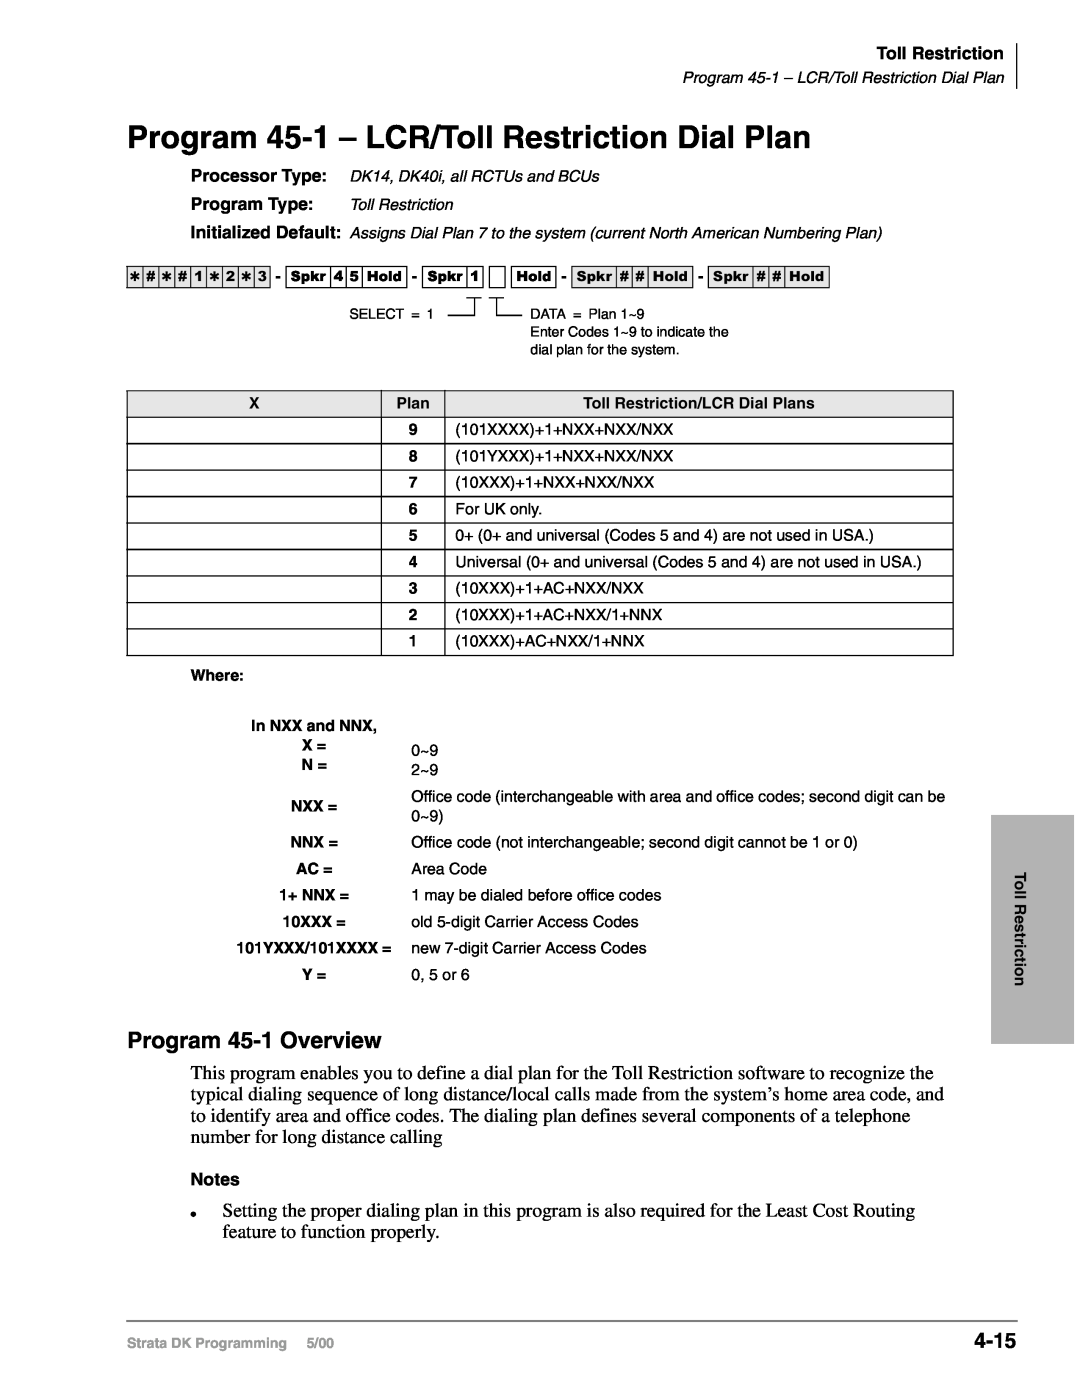 Toshiba dk14, DK40I, DK424I manual Program 45-1– LCR/Toll Restriction Dial Plan, Program 45-1Overview, 4-15 